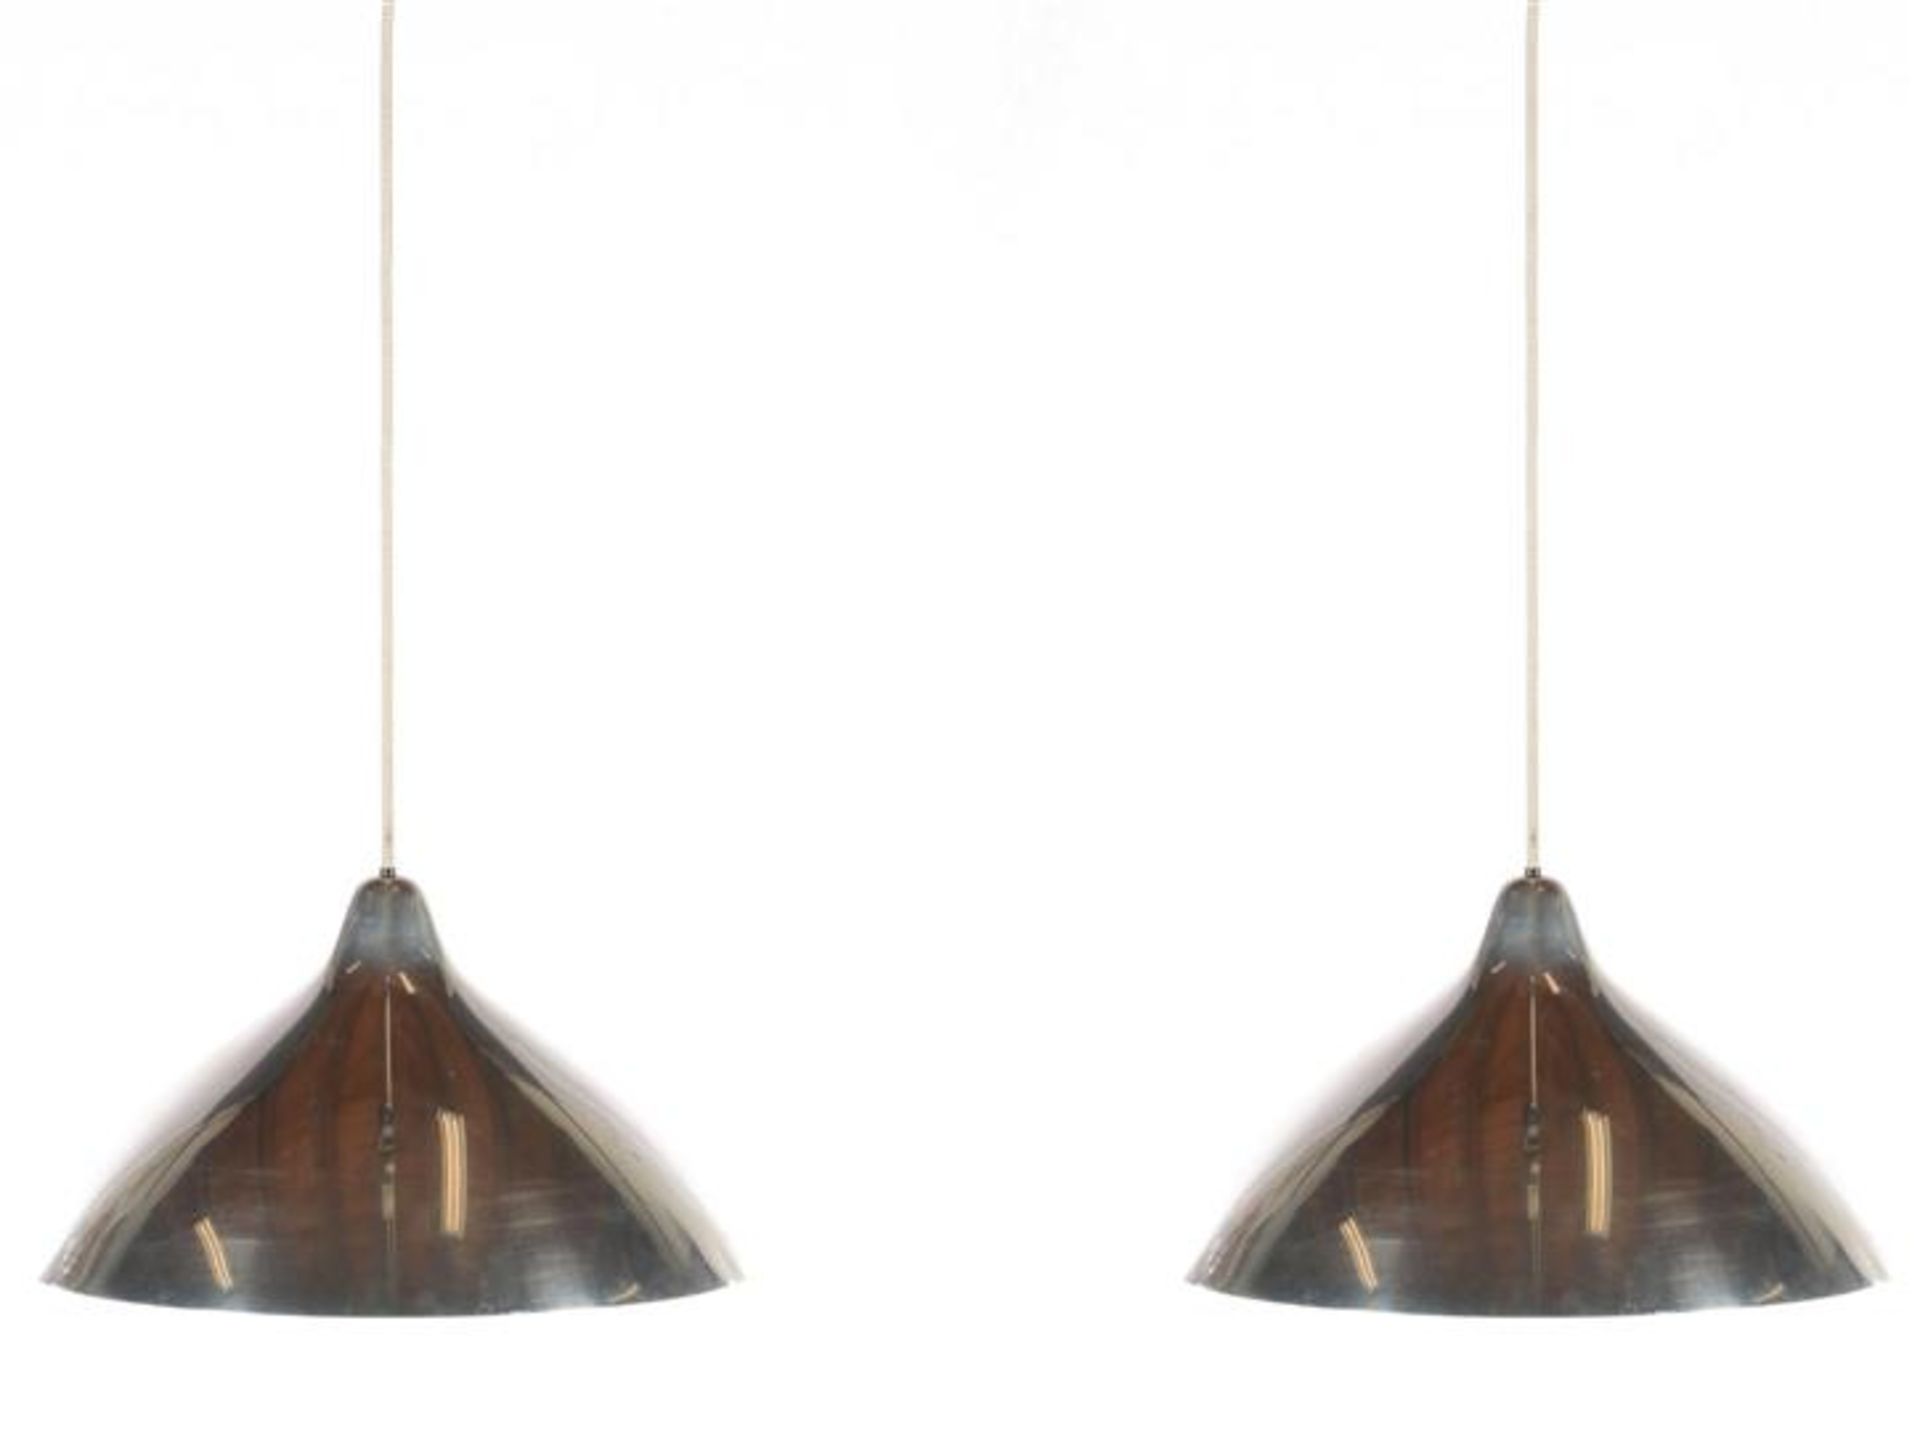 2 aluminum hanging lamps / billiard lamps, excl. Cord 24 cm high and 44 cm diameter